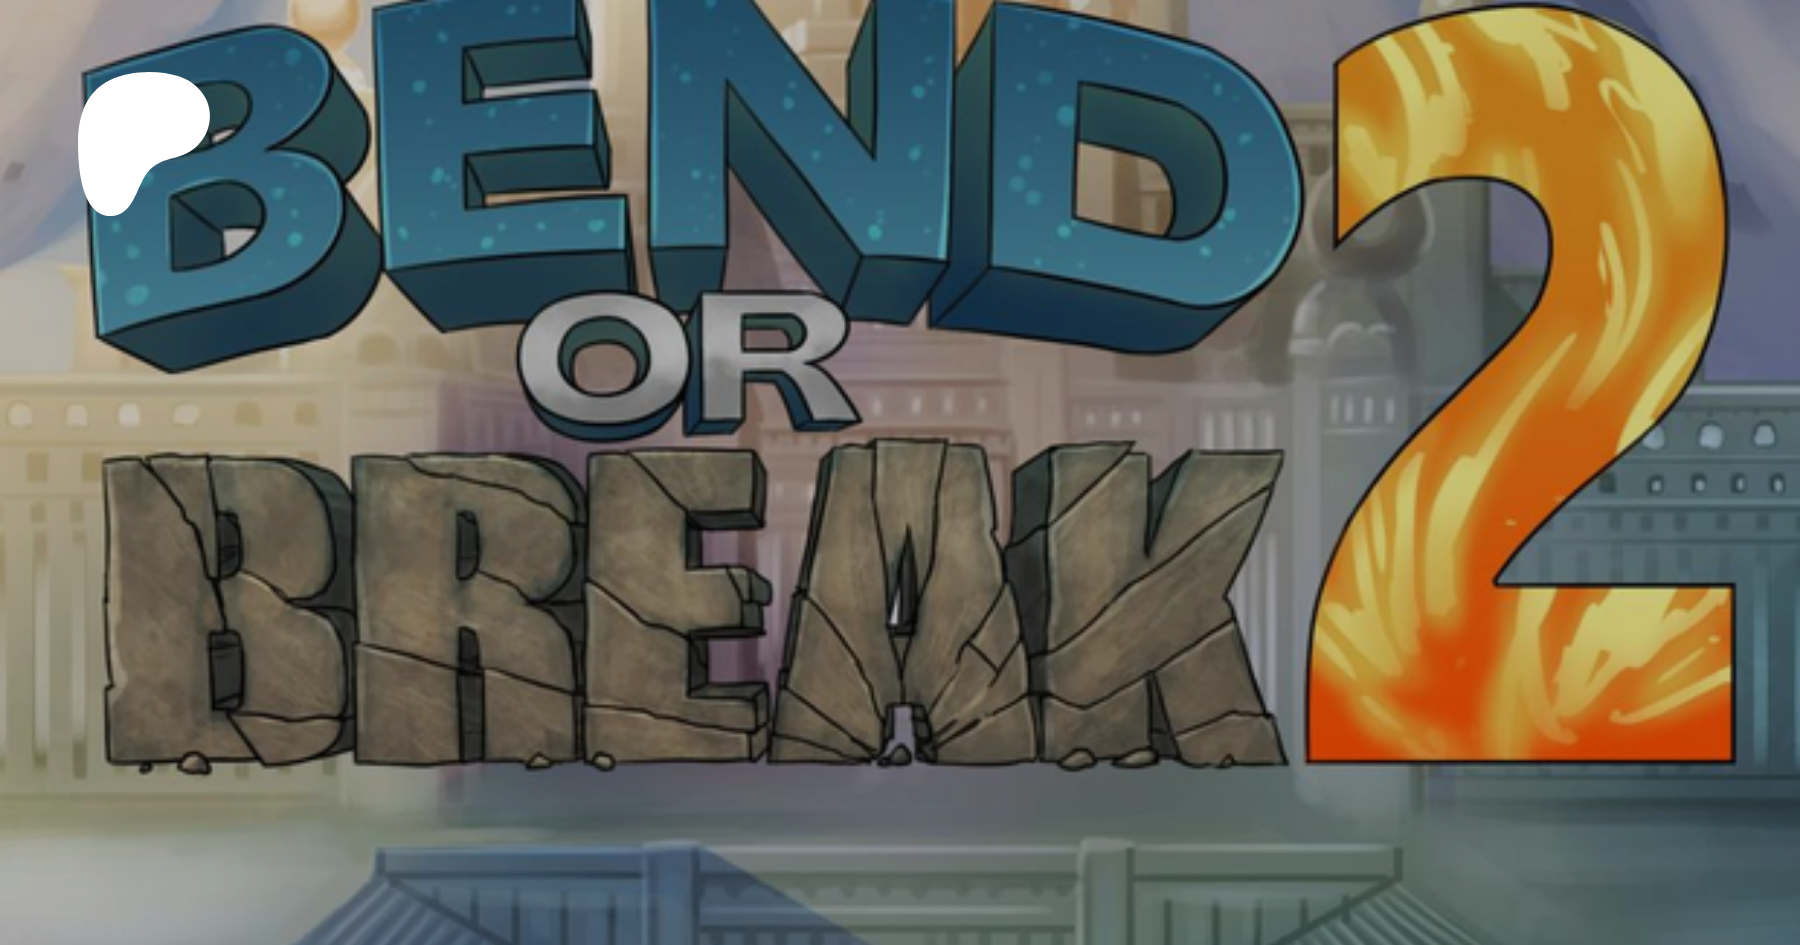 Bend or break 2